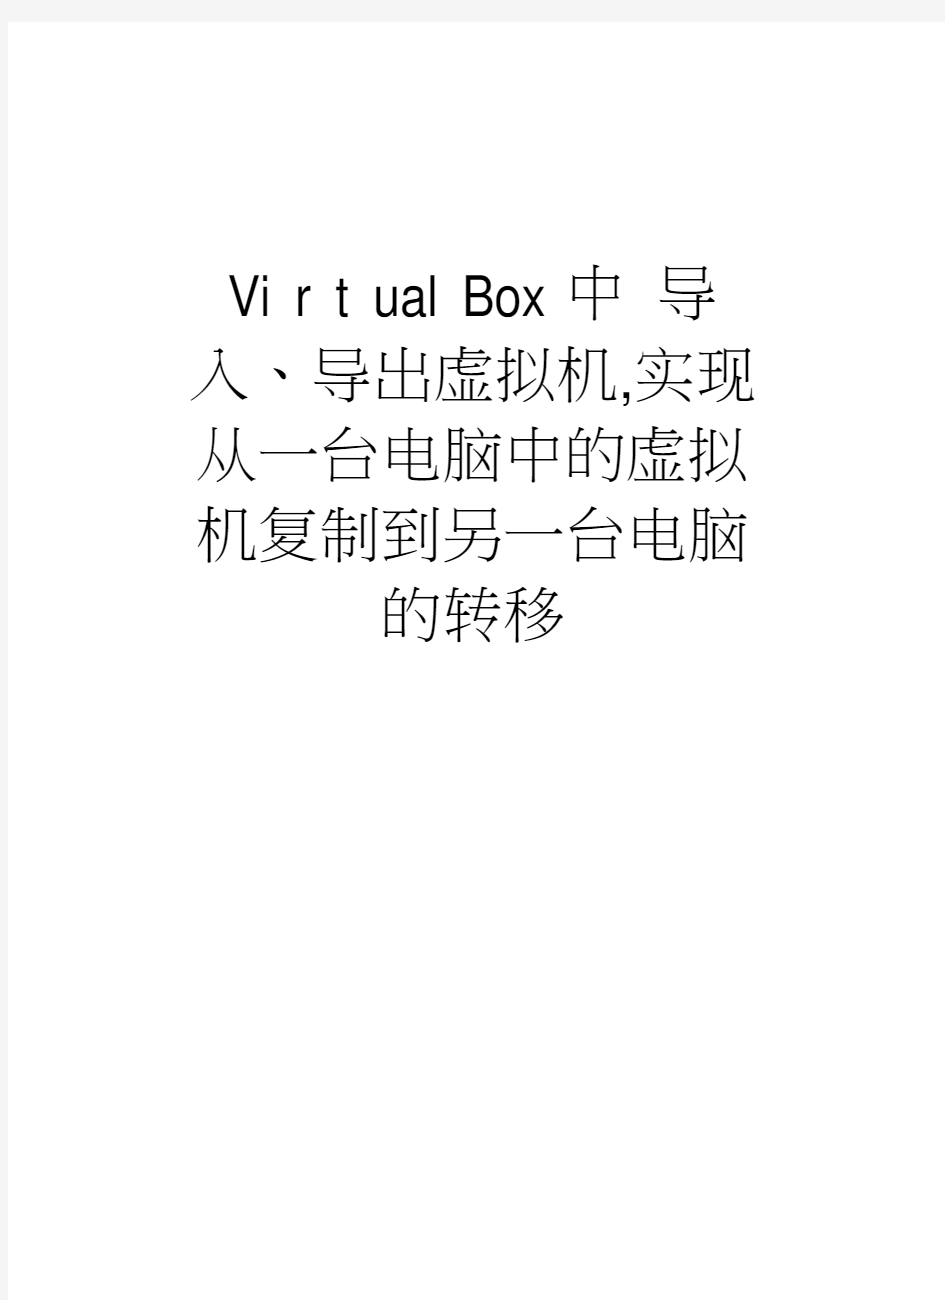 VirtualBox中导入、导出虚拟机,实现从一台电脑中的虚拟机复制到另一台电脑的转移学习资料